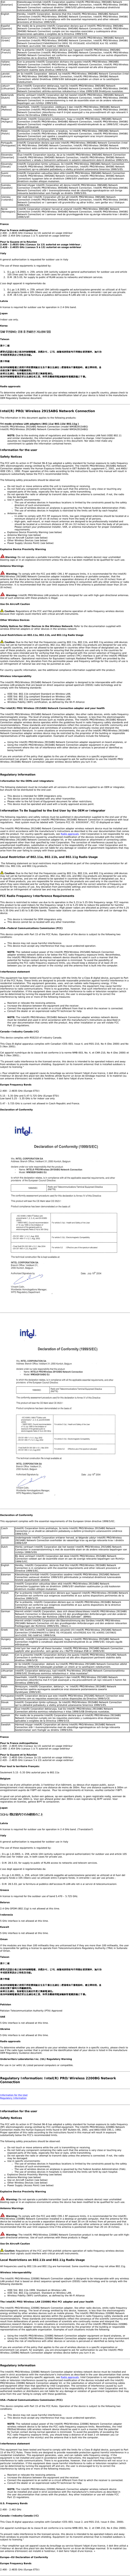 Esti [Estonian] Käesolevaga kinnitab Intel(R) Corporation seadme Intel(R) PRO/Wireless 3965ABG Network Connection (Intel(R) PRO/Wireless 3945ABG Network Connection, Intel(R) PRO/Wireless 3945BG Network Connection) vastavust direktiivi 1999/5/EÜ põhinõuetele ja nimetatud direktiivist tulenevatele teistele asjakohastele sätetele.English Hereby, Intel(R) Corporation, declares that this Intel(R) PRO/Wireless 3965ABG Network Connection (Intel(R) PRO/Wireless 3945ABG Network Connection, Intel(R) PRO/Wireless 3945BG Network Connection) is in compliance with the essential requirements and other relevant provisions of Directive 1999/5/EC.Español [Spanish] Por medio de la presente Intel(R) Corporation declara que el Intel(R) PRO/Wireless 3965ABG Network Connection (Intel(R) PRO/Wireless 3945ABG Network Connection, Intel(R) PRO/Wireless 3945BG Network Connection) cumple con los requisitos esenciales y cualesquiera otras disposiciones aplicables o exigibles de la Directiva 1999/5/CE. Ελληνικ• [Greek] ΜΕ ΤΗΝ ΠΑΡΟΥΣΑ Intel(R) Corporation ∆ΗΛΩΝΕΙ ΟΤΙ Intel(R) PRO/Wireless 3965ABG Network Connection (Intel(R) PRO/Wireless 3945ABG Network Connection, Intel(R) PRO/Wireless 3945BG Network Connection)ΣΥΜΜΟΡΦΩΝΕΤΑΙ ΠΡΟΣ ΤΙΣ ΟΥΣΙΩ∆ΕΙΣ ΑΠΑΙΤΗΣΕΙΣ ΚΑΙ ΤΙΣ ΛΟΙΠΕΣ ΣΧΕΤΙΚΕΣ ∆ΙΑΤΑΞΕΙΣ ΤΗΣ Ο∆ΗΓΙΑΣ 1999/5/ΕΚ.Français [French]  Par la présente Intel(R) Corporation déclare que l&apos;appareil Intel(R) PRO/Wireless 3965ABG Network Connection (Intel(R) PRO/Wireless 3945ABG Network Connection, Intel(R) PRO/Wireless 3945BG Network Connection) est conforme aux exigences essentielles et aux autres dispositions pertinentes de la directive 1999/5/CE.Italiano [Italian] Con la presente Intel(R) Corporation dichiara che questo Intel(R) PRO/Wireless 3965ABG Network Connection (Intel(R) PRO/Wireless 3945ABG Network Connection, Intel(R) PRO/Wireless 3945BG Network Connection) è conforme ai requisiti essenziali ed alle altre disposizioni pertinenti stabilite dalla direttiva 1999/5/CE. Latviski [Latvian] Ar šo Intel(R) Corporation  deklarē, ka Intel(R) PRO/Wireless 3965ABG Network Connection (Intel(R) PRO/Wireless 3945ABG Network Connection, Intel(R) PRO/Wireless 3945BG Network Connection) atbilst Direktīvas 1999/5/EK būtiskajām prasībām un citiem ar to saistītajiem noteikumiem.Lietuvi• [Lithuanian] Šiuo Intel(R) Corporation deklaruoja, kad šis Intel(R) PRO/Wireless 3965ABG Network Connection (Intel(R) PRO/Wireless 3945ABG Network Connection, Intel(R) PRO/Wireless 3945BG Network Connection) atitinka esminius reikalavimus ir kitas 1999/5/EB Direktyvos nuostatas.Nederlands [Dutch] Hierbij verklaart Intel(R) Corporation dat het toestel Intel(R) PRO/Wireless 3965ABG Network Connection (Intel(R) PRO/Wireless 3945ABG Network Connection, Intel(R) PRO/Wireless 3945BG Network Connection) in overeenstemming is met de essentiële eisen en de andere relevante bepalingen van richtlijn 1999/5/EG. Malti [Maltese] Hawnhekk, Intel(R) Corporation, jiddikjara li dan Intel(R) PRO/Wireless 3965ABG Network Connection (Intel(R) PRO/Wireless 3945ABG Network Connection, Intel(R) PRO/Wireless 3945BG Network Connection) jikkonforma mal-ħti•ijiet essenzjali u ma provvedimenti oħrajn relevanti li hemm fid-Dirrettiva 1999/5/EC.Magyar [Hungary] Alulírott, Intel(R) Corporation nyilatkozom, hogy a Intel(R) PRO/Wireless 3965ABG Network Connection (Intel(R) PRO/Wireless 3945ABG Network Connection, Intel(R) PRO/Wireless 3945BG Network Connection) megfelel a vonatkozó alapvetõ követelményeknek és az 1999/5/EC irányelv egyéb elõírásainak.Polski [Polish] Niniejszym, Intel(R) Corporation, o•wiadcza, •e Intel(R) PRO/Wireless 3965ABG Network Connection (Intel(R) PRO/Wireless 3945ABG Network Connection, Intel(R) PRO/Wireless 3945BG Network Connection) jest zgodne z zasadniczymi wymaganiami oraz innymi stosownymi postanowieniami Dyrektywy 1999/5/WE.Português [Portuguese] Intel(R) Corporation declara que este Intel(R) PRO/Wireless 3965ABG Network Connection (Intel(R) PRO/Wireless 3945ABG Network Connection, Intel(R) PRO/Wireless 3945BG Network Connection) está conforme com os requisitos essenciais e outras disposições da Directiva 1999/5/CE. Slovensko [Slovenian] Šiuo Intel(R) Corporation izjavlja, da je ta Intel(R) PRO/Wireless 3965ABG Network Connection (Intel(R) PRO/Wireless 3945ABG Network Connection, Intel(R) PRO/Wireless 3945BG Network Connection) v skladu z bistvenimi zahtevami in ostalimi relevantnimi dolo•ili direktive 1999/5/ES.Slovensky [Slovak] Intel(R) Corporation týmto vyhlasuje, že Intel(R) PRO/Wireless 3965ABG Network Connection (Intel(R) PRO/Wireless 3945ABG Network Connection, Intel(R) PRO/Wireless 3945BG Network Connection) sp••a základné požiadavky a všetky príslušné ustanovenia Smernice 1999/5/ES.Suomi [Finnish] Intel(R) Corporation vakuuttaa täten että Intel(R) PRO/Wireless 3965ABG Network Connection (Intel(R) PRO/Wireless 3945ABG Network Connection, Intel(R) PRO/Wireless 3945BG Network Connection) tyyppinen laite on direktiivin 1999/5/EY oleellisten vaatimusten ja sitä koskevien direktiivin muiden ehtojen mukainen. Svenska [Swedish] Härmed intygar Intel(R) Corporation att denna Intel(R) PRO/Wireless 3965ABG Network Connection (Intel(R) PRO/Wireless 3945ABG Network Connection, Intel(R) PRO/Wireless 3945BG Network Connection) står I överensstämmelse med de väsentliga egenskapskrav och övriga relevanta bestämmelser som framgår av direktiv 1999/5/EG.Íslenska [Icelandic] Hér með lýsir Intel(R) Corporation yfir því að Intel(R) PRO/Wireless 3965ABG Network Connection (Intel(R) PRO/Wireless 3945ABG Network Connection, Intel(R) PRO/Wireless 3945BG Network Connection) er í samræmi við grunnkröfur og aðrar kröfur, sem gerðar eru í tilskipun 1999/5/EC. Norsk [Norwegian]:  Intel(R) Corporation erklærer herved at utstyret Intel(R) PRO/Wireless 3965ABG Network Connection (Intel(R) PRO/Wireless 3945ABG Network Connection, Intel(R) PRO/Wireless 3945BG Network Connection) er i samsvar med de grunnleggende krav og øvrige relevante krav i direktiv 1999/5/EF. FrancePour la France métropolitaine 2.400 - 2.4835 GHz (Canaux 1à 13) autorisé en usage intérieur  2.400 -2.454 GHz (canaux 1 à 7) autorisé en usage extérieur Pour la Guyane et la Réunion  2.400 - 2.4835 GHz (Canaux 1à 13) autorisé en usage intérieur .  2.420 - 2.4835 GHz (canaux 5 à 13) autorisé en usage extérieur Italy A general authorization is requested for outdoor use in Italy The use of these equipments is regulated by: 1.  D.L.gs 1.8.2003, n. 259, article 104 (activity subject to general authorization) for outdoor use and article 105 (free use) for indoor use, in both cases for private use. 2.  D.M. 28.5.03, for supply to public of RLAN access to networks and telecom services. L’uso degli apparati è regolamentato da: 1.  D.L.gs 1.8.2003, n. 259, articoli 104 (attività soggette ad autorizzazione generale) se utilizzati al di fuori del proprio fondo e 105 (libero uso) se utilizzati entro il proprio fondo, in entrambi i casi per uso private. 2.  D.M. 28.5.03, per la fornitura al pubblico dell’accesso R-LAN alle reti e ai servizi di telecomunicazioni. Latvia A license is required for outdoor use for operation in 2.4 GHz band. JapanIndoor use only.Korea  Taiwan  Radio approvalsTo determine whether you are allowed to use your wireless network device in a specific country, please check to see if the radio type number that is printed on the identification label of your device is listed in the manufacture OEM Regulatory Guidance document. Intel(R) PRO/Wireless 2915ABG Network ConnectionThe information in this document applies to the following products: Tri-mode wireless LAN adapters (802.11a/802.11b/802.11g ) Intel(R) PRO/Wireless 2915ABG Network Connection (model WM3B2915ABG) Intel(R) PRO/Wireless 2915ABG Network Connection (model WM3A2915ABG) NOTE: Due to the evolving state of regulations and standards in the wireless LAN field (IEEE 802.11 and similar standards), the information provided herein is subject to change. Intel Corporation assumes no responsibility for errors or omissions in this document. Nor does Intel make any commitment to update the information contained herein. Information for the userSafety NoticesThe FCC with its action in ET Docket 96-8 has adopted a safety standard for human exposure to radio frequency (RF) electromagnetic energy emitted by FCC certified equipment. The Intel(R) PRO/Wireless 2915ABG Network Connection adapter meets the Human Exposure limits found in OET Bulletin 65, supplement C, 2001, and ANSI/IEEE C95.1, 1992. Proper operation of this radio according to the instructions found in this manual will result in exposure substantially below the FCC’s recommended limits. The following safety precautions should be observed: ●     Do not touch or move antenna while the unit is transmitting or receiving. ●     Do not hold any component containing the radio such that the antenna is very close or touching any exposed parts of the body, especially the face or eyes, while transmitting. ●     Do not operate the radio or attempt to transmit data unless the antenna is connected; if not, the radio may be damaged. ●     Use in specific environments: ❍     The use of wireless devices in hazardous locations is limited by the constraints posed by the safety directors of such environments. ❍     The use of wireless devices on airplanes is governed by the Federal Aviation Administration (FAA). ❍     The use of wireless devices in hospitals is restricted to the limits set forth by each hospital. ●     Antenna use: ❍     In order to comply with FCC RF exposure limits, low gain integrated antennas should be located at a minimum distance of 20 cm (8 inches) or more from the body of all persons. ❍     High-gain, wall-mount, or mast-mount antennas are designed to be professionally installed and should be located at a minimum distance of 30 cm (12 inches) or more from the body of all persons. Please contact your professional installer, VAR, or antenna manufacturer for proper installation requirements. ●     Explosive Device Proximity Warning (see below) ●     Antenna Warning (see below)●     Use on Aircraft Caution (see below)●     Other Wireless Devices (see below)●     Power Supply (Access Point) (see below)Explosive Device Proximity WarningWarning: Do not operate a portable transmitter (such as a wireless network device) near unshielded blasting caps or in an explosive environment unless the device has been modified to be qualified for such use. Antenna Warnings Warning: To comply with the FCC and ANSI C95.1 RF exposure limits, it is recommended for the Intel(R) PRO/Wireless 2915ABG Network Connection adapter installed in a desktop or portable computer, that the antenna for this device be installed so as to provide a separation distance of al least 20 cm (8 inches) from all persons and that the antenna must not be co-located or operating in conjunction with any other antenna or radio transmitter. It is recommended that the user limit exposure time if the antenna is positioned closer than 20 cm (8 inches).  Warning: Intel(R) PRO/Wireless LAN products are not designed for use with high-gain directional antennas. Use of such antennas with these products is illegal. Use On Aircraft Caution Caution: Regulations of the FCC and FAA prohibit airborne operation of radio-frequency wireless devices because their signals could interfere with critical aircraft instruments. Other Wireless DevicesSafety Notices for Other Devices in the Wireless Network: Refer to the documentation supplied with wireless Ethernet adapters or other devices in the wireless network. Local Restrictions on 802.11a, 802.11b, and 802.11g Radio Usage Caution: Due to the fact that the frequencies used by 802.11a, 802.11b, and 802.11g wireless LAN devices may not yet be harmonized in all countries, 802.11a, 802.11b, and 802.11g products are designed for use only in specific countries, and are not allowed to be operated in countries other than those of designated use. As a user of these products, you are responsible for ensuring that the products are used only in the countries for which they were intended and for verifying that they are configured with the correct selection of frequency and channel for the country of use. The device transmit power control (TPC) interface is part of the Intel(R) PROSet/Wireless software. Operational restrictions for Equivalent Isotropic Radiated Power (EIRP) are provided by the system manufacturer. Any deviation from the permissible power and frequency settings for the country of use is an infringement of national law and may be punished as such. For country-specific information, see the additional compliance information supplied with the product. Wireless interoperabilityThe Intel(R) PRO/Wireless 2915ABG Network Connection adapter is designed to be interoperable with other wireless LAN products that are based on direct sequence spread spectrum (DSSS) radio technology and to comply with the following standards: ●     IEEE Std. 802.11b compliant Standard on Wireless LAN.●     IEEE Std. 802.11g compliant Standard on Wireless LAN.●     IEEE Std. 802.11a compliant Standard on Wireless LAN.●     Wireless Fidelity (WiFi) certification, as defined by the Wi-Fi Alliance The Intel(R) PRO/Wireless 2915ABG Network Connection adapter and your healthThe Intel(R) PRO/Wireless 2915ABG Network Connection adapter, like other radio devices, emits radio frequency electromagnetic energy. The level of energy emitted by this device, however, is less than the electromagnetic energy emitted by other wireless devices such as mobile phones. The Intel(R) PRO/Wireless 2915ABG Network Connection adapter wireless device operates within the guidelines found in radio frequency safety standards and recommendations. These standards and recommendations reflect the consensus of the scientific community and result from deliberations of panels and committees of scientists who continually review and interpret the extensive research literature. In some situations or environments, the use of the Intel(R) PRO/Wireless 2915ABG Network Connection adapter wireless device may be restricted by the proprietor of the building or responsible representatives of the applicable organization. Examples of such situations include the following: ●     Using the Intel(R) PRO/Wireless 2915ABG Network Connection adapter equipment on board airplanes, or ●     Using the Intel(R) PRO/Wireless 2915ABG Network Connection adapter equipment in any other environment where the risk of interference with other devices or services is perceived or identified as being harmfulIf you are uncertain of the policy that applies to the use of wireless devices in a specific organization or environment (an airport, for example), you are encouraged to ask for authorization to use the Intel(R) PRO/Wireless 2915ABG Network Connection adapter wireless device before you turn it on. Regulatory informationInformation for the OEMs and Integrators:  The following statement must be included with all versions of this document supplied to an OEM or integrator, but should not be distributed to the end user. ●     This device is intended for OEM integrators only. ●     This device cannot be co-located with any other transmitter. ●     Please refer to the full Grant of Equipment document for other restrictions. ●     This device must be operated and used with a locally approved access point.Information To Be Supplied to the End User by the OEM or Integrator The following regulatory and safety notices must be published in documentation supplied to the end user of the product or system incorporating an Intel(R) PRO/Wireless 2915ABG Network Connection in compliance with local regulations.  Host system must be labeled with &quot;Contains FCC ID: XXXXXXXX&quot;, FCC ID displayed on label. The Intel(R) PRO/Wireless 2915ABG Network Connection adapter wireless network device must be installed and used in strict accordance with the manufacturer&apos;s instructions as described in the user documentation that comes with the product. For country-specific approvals, see Radio approvals. Intel Corporation is not responsible for any radio or television interference caused by unauthorized modification of the devices included with the Intel(R) PRO/Wireless 2915ABG Network Connection adapter kit, or the substitution or attachment of connecting cables and equipment other than that specified by Intel Corporation. The correction of interference caused by such unauthorized modification, substitution or attachment is the responsibility of the user. Intel Corporation and its authorized resellers or distributors are not liable for any damage or violation of government regulations that may arise from the user failing to comply with these guidelines. Local Restriction of 802.11a, 802.11b, and 802.11g Radio Usage  The following statement on local restrictions must be published as part of the compliance documentation for all 802.11a, 802.11b, and 802.11g products.  Caution: Due to the fact that the frequencies used by 802.11a, 802.11b, and 802.11g wireless LAN devices may not yet be harmonized in all countries, 802.11a, 802.11b, and 802.11g products are designed for use only in specific countries, and are not allowed to be operated in countries other than those of designated use. As a user of these products, you are responsible for ensuring that the products are used only in the countries for which they were intended and for verifying that they are configured with the correct selection of frequency and channel for the country of use. Any deviation from permissible settings and restrictions in the country of use could be an infringement of national law and may be punished as such. FCC Radio Frequency Interference Requirements This device is restricted to indoor use due to its operation in the 5.15 to 5.25 GHz frequency range. FCC requires this product to be used indoors for the frequency range 5.15 to 5.25 GHz to reduce the potential for harmful interference to co-channel Mobile Satellite systems. High power radars are allocated as primary users of the 5.25 to 5.35 GHz and 5.65 to 5.85 GHz bands. These radar stations can cause interference with and /or damage this device. ●     This device is intended for OEM integrators only.●     This device cannot be co-located with any other transmitter. USA—Federal Communications Commission (FCC)This device complies with Part 15 of the FCC Rules. Operation of the device is subject to the following two conditions: ●     This device may not cause harmful interference. ●     This device must accept any interference that may cause undesired operation.NOTE: The radiated output power of the Intel(R) PRO/Wireless 2915ABG Network Connection adapter wireless network device is far below the FCC radio frequency exposure limits. Nevertheless, the Intel(R) PRO/Wireless LAN wireless network device should be used in such a manner that the potential for human contact during normal operation is minimized. To avoid the possibility of exceeding the FCC radio frequency exposure limits, you should keep a distance of at least 20 cm between you (or any other person in the vicinity) and the antenna that is built into the computer.Interference statementThis equipment has been tested and found to comply with the limits for a Class B digital device, pursuant to Part 15 of the FCC Rules. These limits are designed to provide reasonable protection against harmful interference in a residential installation. This equipment generates, uses, and can radiate radio frequency energy. If the equipment is not installed and used in accordance with the instructions, the equipment may cause harmful interference to radio communications. There is no guarantee, however, that such interference will not occur in a particular installation. If this equipment does cause harmful interference to radio or television reception (which can be determined by turning the equipment off and on), the user is encouraged to try to correct the interference by taking one or more of the following measures: ●     Reorient or relocate the receiving antenna. ●     Increase the distance between the equipment and the receiver. ●     Connect the equipment to an outlet on a circuit different from that to which the receiver is connected. ●     Consult the dealer or an experienced radio/TV technician for help. NOTE: The Intel(R) PRO/Wireless 2915ABG Network Connection adapter wireless network device must be installed and used in strict accordance with the manufacturer&apos;s instructions as described in the user documentation that comes with the product. Any other installation or use will violate FCC Part 15 regulations.Canada—Industry Canada (IC)This device complies with RSS210 of Industry Canada. This Class B digital apparatus complies with Canadian ICES-003, Issue 4, and RSS-210, No 4 (Dec 2000) and No 5 (Nov 2001). Cet appariel numérique de la classe B est conforme à la norme NMB-003, No. 4, et CNR-210, No 4 (Dec 2000) et No 5 (Nov 2001).. &quot;To prevent radio interference to the licensed service, this device is intended to be operated indoors and away from windows to provide maximum shielding. Equipment (or its transmit antenna) that is installed outdoors is subject to licensing.&quot; « Pour empêcher que cet appareil cause du brouillage au service faisant l&apos;objet d&apos;une licence, il doit être utilisé a l&apos;intérieur et devrait être placé loin des fenêtres afinde fournir un écran de blindage maximal. Si le matériel (ou son antenne d&apos;émission) est installé à l&apos;extérieur, il doit faire l&apos;objet d&apos;une licence. » Europe Frequency Bands 2.400 - 2.4835 GHz (Europe ETSI)  5.15 - 5.35 GHz and 5.47-5.725 GHz (Europe ETSI) Low band 5.25 - 5.35 GHz is for indoor use only  5.47 - 5.725 GHz is current not allowed in Czech Republic and France. Declaration of Conformity   Declaration of Conformity This equipment complies with the essential requirements of the European Union directive 1999/5/EC. Czech Intel(R) Corporation tímto prohlašuje, že tento Intel(R) PRO/Wireless 2915ABG Network Connection je ve shodě se základními požadavky a dalšími p•íslušnými ustanoveními směrnice 1999/5/ES.&quot;Danish Undertegnede Intel(R) Corporation erklærer herved, at følgende udstyr Intel(R) PRO/Wireless 2915ABG Network Connection overholder de væsentlige krav og øvrige relevante krav i direktiv 1999/5/EFDutch Hierbij verklaart Intel(R) Corporation dat het toestel Intel(R) PRO/Wireless 2915ABG Network Connection in overeenstemming is met de essentiële eisen en de andere relevante bepalingen van richtlijn 1999/5/EG Bij deze verklaart Intel(R) Corporation dat deze Intel(R) PRO/Wireless 2915ABG Network Connection voldoet aan de essentiële eisen en aan de overige relevante bepalingen van Richtlijn 1999/5/EC.English Hereby, Intel(R) Corporation, declares that this Intel(R) PRO/Wireless 2915ABG Network Connection is in compliance with the essential requirements and other relevant provisions of Directive 1999/5/EC.Estonian Käesolevaga kinnitab Intel(R) Corporation seadme Intel(R) PRO/Wireless 2915ABG Network Connection vastavust direktiivi 1999/5/EÜ põhinõuetele ja nimetatud direktiivist tulenevatele teistele asjakohastele sätetele.Finnish Intel(R) Corporation vakuuttaa täten että Intel(R) PRO/Wireless 2915ABG Network Connection tyyppinen laite on direktiivin 1999/5/EY oleellisten vaatimusten ja sitä koskevien direktiivin muiden ehtojen mukainen. French Par la présente Intel(R) Corporation déclare que l&apos;appareil Intel(R) PRO/Wireless 2915ABG Network Connection est conforme aux exigences essentielles et aux autres dispositions pertinentes de la directive 1999/5/CE. Par la présente, Intel(R) Corporation déclare que ce Intel(R) PRO/Wireless 2915ABG Network Connection est conforme aux exigences essentielles et aux autres dispositions de la directive 1999/5/CE qui lui sont applicables. German Hiermit erklärt Intel(R) Corporation, dass sich dieser/diese/dieses Intel(R) PRO/Wireless 2915ABG Network Connection in Übereinstimmung mit den grundlegenden Anforderungen und den anderen relevanten Vorschriften der Richtlinie 1999/5/EG befindet&quot;. (BMWi)Hiermit erklärt Intel(R) Corporation die Übereinstimmung des Gerätes Intel(R) PRO/Wireless 2915ABG Network Connection mit den grundlegenden Anforderungen und den anderen relevanten Festlegungen der Richtlinie 1999/5/EG. (Wien).=Greek ΜΕ ΤΗΝ ΠΑΡΟΥΣΑ Intel(R) Corporation ∆ΗΛΩΝΕΙ ΟΤΙ Intel(R) PRO/Wireless 2915ABG Network Connection ΣΥΜΜΟΡΦΩΝΕΤΑΙ ΠΡΟΣ ΤΙΣ ΟΥΣΙΩ∆ΕΙΣ ΑΠΑΙΤΗΣΕΙΣ ΚΑΙ ΤΙΣ ΛΟΙΠΕΣ ΣΧΕΤΙΚΕΣ ∆ΙΑΤΑΞΕΙΣ ΤΗΣ Ο∆ΗΓΙΑΣ 1999/5/ΕΚ.Hungary Alulírott, Intel(R) Corporation nyilatkozom, hogy a Intel(R) PRO/Wireless 2915ABG Network Connection megfelel a vonatkozó alapvetõ követelményeknek és az 1999/5/EC irányelv egyéb elõírásainak.Icelandic  Intel lysir her med yfir að thessi bunadur, Intel(R) PRO/Wireless 2915ABG Network Connection , uppfyllir allar grunnkrofur, sem gerdar eru i R&amp;TTE tilskipun ESB nr 1999/5/EC Italian Con la presente Intel(R) Corporation dichiara che questo Intel(R) PRO/Wireless 2915ABG Network Connection è conforme ai requisiti essenziali ed alle altre disposizioni pertinenti stabilite dalla direttiva 1999/5/CE. Latvian Ar šo Intel(R) Corporation  deklarē, ka Intel(R) PRO/Wireless 2915ABG Network Connection atbilst Direktīvas 1999/5/EK būtiskajām prasībām un citiem ar to saistītajiem noteikumiem.Lithuanian Intel(R) Corporation deklaruoja, kad Intel(R) Pro/Wireless 2915ABG Network Connectionatitinka 1999/5/EC Direktyvos esminius reikalavimus ir  kitas nuostatas&quot;.Malti Hawnhekk, Intel(R) Corporation, jiddikjara li dan Intel(R) PRO/Wireless 2915ABG Network Connection jikkonforma mal-ħti•ijiet essenzjali u ma provvedimenti oħrajn relevanti li hemm fid-Dirrettiva 1999/5/EC.Polish Niniejszym, Intel(R) Corporation, deklaruj•, •e  Intel(R) PRO/Wireless 2915ABG Network Connection spełnia wymagania zasadnicze oraz stosowne postanowienia zawarte  Dyrektywie 1999/5/EC.Portuguese Intel(R) Corporation declara que este Intel(R) PRO/Wireless 2915ABG Network Connection está conforme com os requisitos essenciais e outras disposições da Directiva 1999/5/CE. Slovak Intel(R) Corporation týmto vyhlasuje, že Intel(R) PRO/Wireless 2915ABG Network Connection sp••a základné požiadavky a všetky príslušné ustanovenia Smernice 1999/5/ES.Slovenia Šiuo Intel(R) Corporation deklaruoja, kad šis Intel(R) PRO/Wireless 2915ABG Network Connection atitinka esminius reikalavimus ir kitas 1999/5/EB Direktyvos nuostatas.Spanish Por medio de la presente Intel(R) Corporation declara que el Intel(R) PRO/Wireless 2915ABG Network Connection cumple con los requisitos esenciales y cualesquiera otras disposiciones aplicables o exigibles de la Directiva 1999/5/CE. Swedish Härmed intygar Intel(R) Corporation att denna Intel(R) PRO/Wireless 2915ABG Network Connection står I överensstämmelse med de väsentliga egenskapskrav och övriga relevanta bestämmelser som framgår av direktiv 1999/5/EG. France Pour la France métropolitaine 2.400 - 2.4835 GHz (Canaux 1à 13) autorisé en usage intérieur  2.400 -2.454 GHz (canaux 1 à 7) autorisé en usage extérieur Pour la Guyane et la Réunion  2.400 - 2.4835 GHz (Canaux 1à 13) autorisé en usage intérieur .  2.420 - 2.4835 GHz (canaux 5 à 13) autorisé en usage extérieur Pour tout le territoire Français: Seulement 5.15 -5.35 GHz autorisé pour le 802.11a Belgium Dans le cas d&apos;une utilisation privée, à l&apos;extérieur d&apos;un bâtiment, au-dessus d&apos;un espace public, aucun enregistrement n&apos;est nécessaire pour une distance de moins de 300m. Pour une distance supérieure à 300m un enregistrement auprès de l&apos;IBPT est requise.  Pour les enregistrements et licences, veuillez contacter l&apos;IBPT. In geval van privé-gebruik, buiten een gebouw, op een openbare plaats, is geen registratie nodig, wanneer de afstand minder dan 300m is. Voor een afstand groter dan 300m is een registratie bij BIPT vereist. Voor registraties en licenties, gelieve BIPT te contacteren. Japan Latvia A license is required for outdoor use for operation in 2.4 GHz band. (Translation?) Italy A general authorization is requested for outdoor use in Italy The use of these equipments is regulated by: - D.L.gs 1.8.2003, n. 259, article 104 (activity subject to general authorization) for outdoor use and article 105 (free use) for indoor use, in both cases for private use. - D.M. 28.5.03, for supply to public of RLAN access to networks and telecom services. L’uso degli apparati è regolamentato da: - D.L.gs 1.8.2003, n. 259, articoli 104 (attività soggette ad autorizzazione generale) se utilizzati al di fuori del proprio fondo e 105 (libero uso) se utilizzati entro il proprio fondo, in entrambi i casi per uso privato ; - D.M. 28.5.03, per la fornitura al pubblico dell’accesso R-LAN alle reti e ai servizi di telecomunicazioni. Greece A license is required for the outdoor use of band 5.470 – 5.725 GHz. Belarus2.4 GHz OFDM (802.11g) is not allowed at this time. Indonesia 5 GHz interface is not allowed at this time. Kuwait5 GHz interface is not allowed at this time. Oman If the modules are less than 100 milliwatts they are unlicensed but if they are more than 100 milliwatts, the user is responsible for getting a license to operate from Telecommunications Regulatory Authority (TRA) in Sultanate of Oman. Taiwan     PakistanPakistan Telecommunication Authority (PTA) Approved UAE5 GHz interface is not allowed at this time. Ukraine5 GHz interface is not allowed at this time. Radio approvalsTo determine whether you are allowed to use your wireless network device in a specific country, please check to see if the radio type number that is printed on the identification label of your device is listed in the manufacture OEM Regulatory Guidance document. Underwriters Laboratories Inc. (UL) Regulatory Warning For use in (or with) UL Listed personal computers or compatible. Regulatory Information: Intel(R) PRO/Wireless 2200BG Network Connection Information for the User Regulatory Information Information for the userSafety NoticesThe FCC with its action in ET Docket 96-8 has adopted a safety standard for human exposure to radio frequency (RF) electromagnetic energy emitted by FCC certified equipment. The Intel(R) PRO/Wireless 2200BG Network Connection meets the Human Exposure limits found in OET Bulletin 65, 2001, and ANSI/IEEE C95.1, 1992. Proper operation of this radio according to the instructions found in this manual will result in exposure substantially below the FCC’s recommended limits. The following safety precautions should be observed: ●     Do not touch or move antenna while the unit is transmitting or receiving. ●     Do not hold any component containing the radio such that the antenna is very close or touching any exposed parts of the body, especially the face or eyes, while transmitting. ●     Do not operate the radio or attempt to transmit data unless the antenna is connected; if not, the radio may be damaged. ●     Use in specific environments: ❍     The use of wireless devices in hazardous locations is limited by the constraints posed by the safety directors of such environments. ❍     The use of wireless devices on airplanes is governed by the Federal Aviation Administration (FAA). ❍     The use of wireless devices in hospitals is restricted to the limits set forth by each hospital.●     Explosive Device Proximity Warning (see below) ●     Antenna Warning (see below) ●     Use on Aircraft Caution (see below) ●     Other Wireless Devices (see below) ●     Power Supply (Access Point) (see below)Explosive Device Proximity Warning Warning: Do not operate a portable transmitter (such as a wireless network device) near unshielded blasting caps or in an explosive environment unless the device has been modified to be qualified for such use. Antenna Warnings Warning: To comply with the FCC and ANSI C95.1 RF exposure limits, it is recommended for the Intel(R) PRO/Wireless 2200BG Network Connection installed in a desktop or portable computer, that the antenna for this device be installed so as to provide a separation distance of al least 20 cm (8 inches) from all persons and that the antenna must not be co-located or operating in conjunction with any other antenna or radio transmitter. It is recommended that the user limit exposure time if the antenna is positioned closer than 20 cm (8 inches).  Warning: The Intel(R) PRO/Wireless 2200BG Network Connection product is not designed for use with high-gain directional antennas. Use of such antennas with these products is illegal. Use On Aircraft Caution Caution: Regulations of the FCC and FAA prohibit airborne operation of radio-frequency wireless devices because their signals could interfere with critical aircraft instruments. Local Restrictions on 802.11b and 802.11g Radio UsageAll frequencies used by 802.11b and 802.11g are harmonized. Some countries though may not allow 802.11g. Wireless interoperabilityThe Intel(R) PRO/Wireless 2200BG Network Connection adapter is designed to be interoperable with any wireless LAN product that is based on direct sequence spread spectrum (DSSS) radio technology and to comply with the following standards: ●     IEEE Std. 802.11b-1999. Standard on Wireless LAN. ●     IEEE Std. 802.11g compliant. Standard on Wireless LAN. ●     Wireless Fidelity (WiFi) certification, as defined by the Wi-Fi Alliance The Intel(R) PRO/Wireless LAN 2200BG Mini PCI adapter and your healthThe Intel(R) PRO/Wireless 2200BG Network Connection adapter, like other radio devices, emits radio frequency electromagnetic energy. The level of energy emitted by this device, however, is less than the electromagnetic energy emitted by other wireless devices such as mobile phones. The Intel(R) PRO/Wireless 2200BG Network Connection adapter wireless device operates within the guidelines found in radio frequency safety standards and recommendations. These standards and recommendations reflect the consensus of the scientific community and result from deliberations of panels and committees of scientists who continually review and interpret the extensive research literature. In some situations or environments, the use of the Intel(R) PRO/Wireless 2200BG Network Connection adapter wireless device may be restricted by the proprietor of the building or responsible representatives of the applicable organization. Examples of such situations include the following: ●     Using the Intel(R) PRO/Wireless 2200BG Network Connection adapter equipment on board airplanes, or ●     Using the Intel(R) PRO/Wireless 2200BG Network Connection adapter equipment in any other environment where the risk of interference with other devices or services is perceived or identified as being harmful.If you are uncertain of the policy that applies to the use of wireless devices in a specific organization or environment (an airport, for example), you are encouraged to ask for authorization to use the Intel(R) PRO/Wireless 2200BG Network Connection adapter wireless device before you turn it on. Regulatory informationThe Intel(R) PRO/Wireless 2200BG Network Connection adapter wireless network device must be installed and used in strict accordance with the manufacturer&apos;s instructions as described in the user documentation that comes with the product. For country-specific approvals, see Radio approvals. Intel Corporation is not responsible for any radio or television interference caused by unauthorized modification of the devices included with the Intel(R) PRO/Wireless 2200BG Network Connection adapter kit, or the substitution or attachment of connecting cables and equipment other than that specified by Intel Corporation. The correction of interference caused by such unauthorized modification, substitution or attachment is the responsibility of the user. Intel Corporation and its authorized resellers or distributors are not liable for any damage or violation of government regulations that may arise from the user failing to comply with these guidelines. USA—Federal Communications Commission (FCC)This device complies with Part 15 of the FCC Rules. Operation of the device is subject to the following two conditions: ●     This device may not cause harmful interference. ●     This device must accept any interference that may cause undesired operation.NOTE: The radiated output power of the Intel(R) PRO/Wireless 2200BG Network Connection adapter wireless network device is far below the FCC radio frequency exposure limits. Nevertheless, the Intel PROSet/Wireless LAN wireless network device should be used in such a manner that the potential for human contact during normal operation is minimized. To avoid the possibility of exceeding the FCC radio frequency exposure limits, you should keep a distance of at least 2 cm between you (or any other person in the vicinity) and the antenna that is built into the computer. Interference statementThis equipment has been tested and found to comply with the limits for a Class B digital device, pursuant to Part 15 of the FCC Rules. These limits are designed to provide reasonable protection against harmful interference in a residential installation. This equipment generates, uses, and can radiate radio frequency energy. If the equipment is not installed and used in accordance with the instructions, the equipment may cause harmful interference to radio communications. There is no guarantee, however, that such interference will not occur in a particular installation. If this equipment does cause harmful interference to radio or television reception (which can be determined by turning the equipment off and on), the user is encouraged to try to correct the interference by taking one or more of the following measures: ●     Reorient or relocate the receiving antenna. ●     Increase the distance between the equipment and the receiver. ●     Connect the equipment to an outlet on a circuit different from that to which the receiver is connected. ●     Consult the dealer or an experienced radio/TV technician for help.NOTE: The Intel(R) PRO/Wireless 2200BG Network Connection adapter wireless network device must be installed and used in strict accordance with the manufacturer&apos;s instructions as described in the user documentation that comes with the product. Any other installation or use will violate FCC Part 15 regulations. U.S. Frequency Bands 2.400 - 2.462 GHz  Canada—Industry Canada (IC)This Class B digital apparatus complies with Canadian ICES-003, Issue 2, and RSS-210, Issue 4 (Dec. 2000). Cet appariel numérique de la classe B est conforme à la norme NMB-003, No. 2, et CNR-210, No 4 (Dec 2000). To prevent radio interference to the licensed service, this device is intended to be operated indoors and away from windows to provide maximum shielding. Equipment (or its transmit antenna) that is installed outdoors is subject to licensing.&quot; « Pour empêcher que cet appareil cause du brouillage au service faisant l&apos;objet d&apos;une licence, il doit être utilisé a l&apos;intérieur et devrait être placé loin des fenêtres afinde fournir un écran de blindage maximal. Si le matériel (ou son antenne d&apos;émission) est installé à l&apos;extérieur, il doit faire l&apos;objet d&apos;une licence. » Europe—EU Declaration of Conformity Europe Frequency Bands 2.400 - 2.4835 GHz (Europe ETSI) 